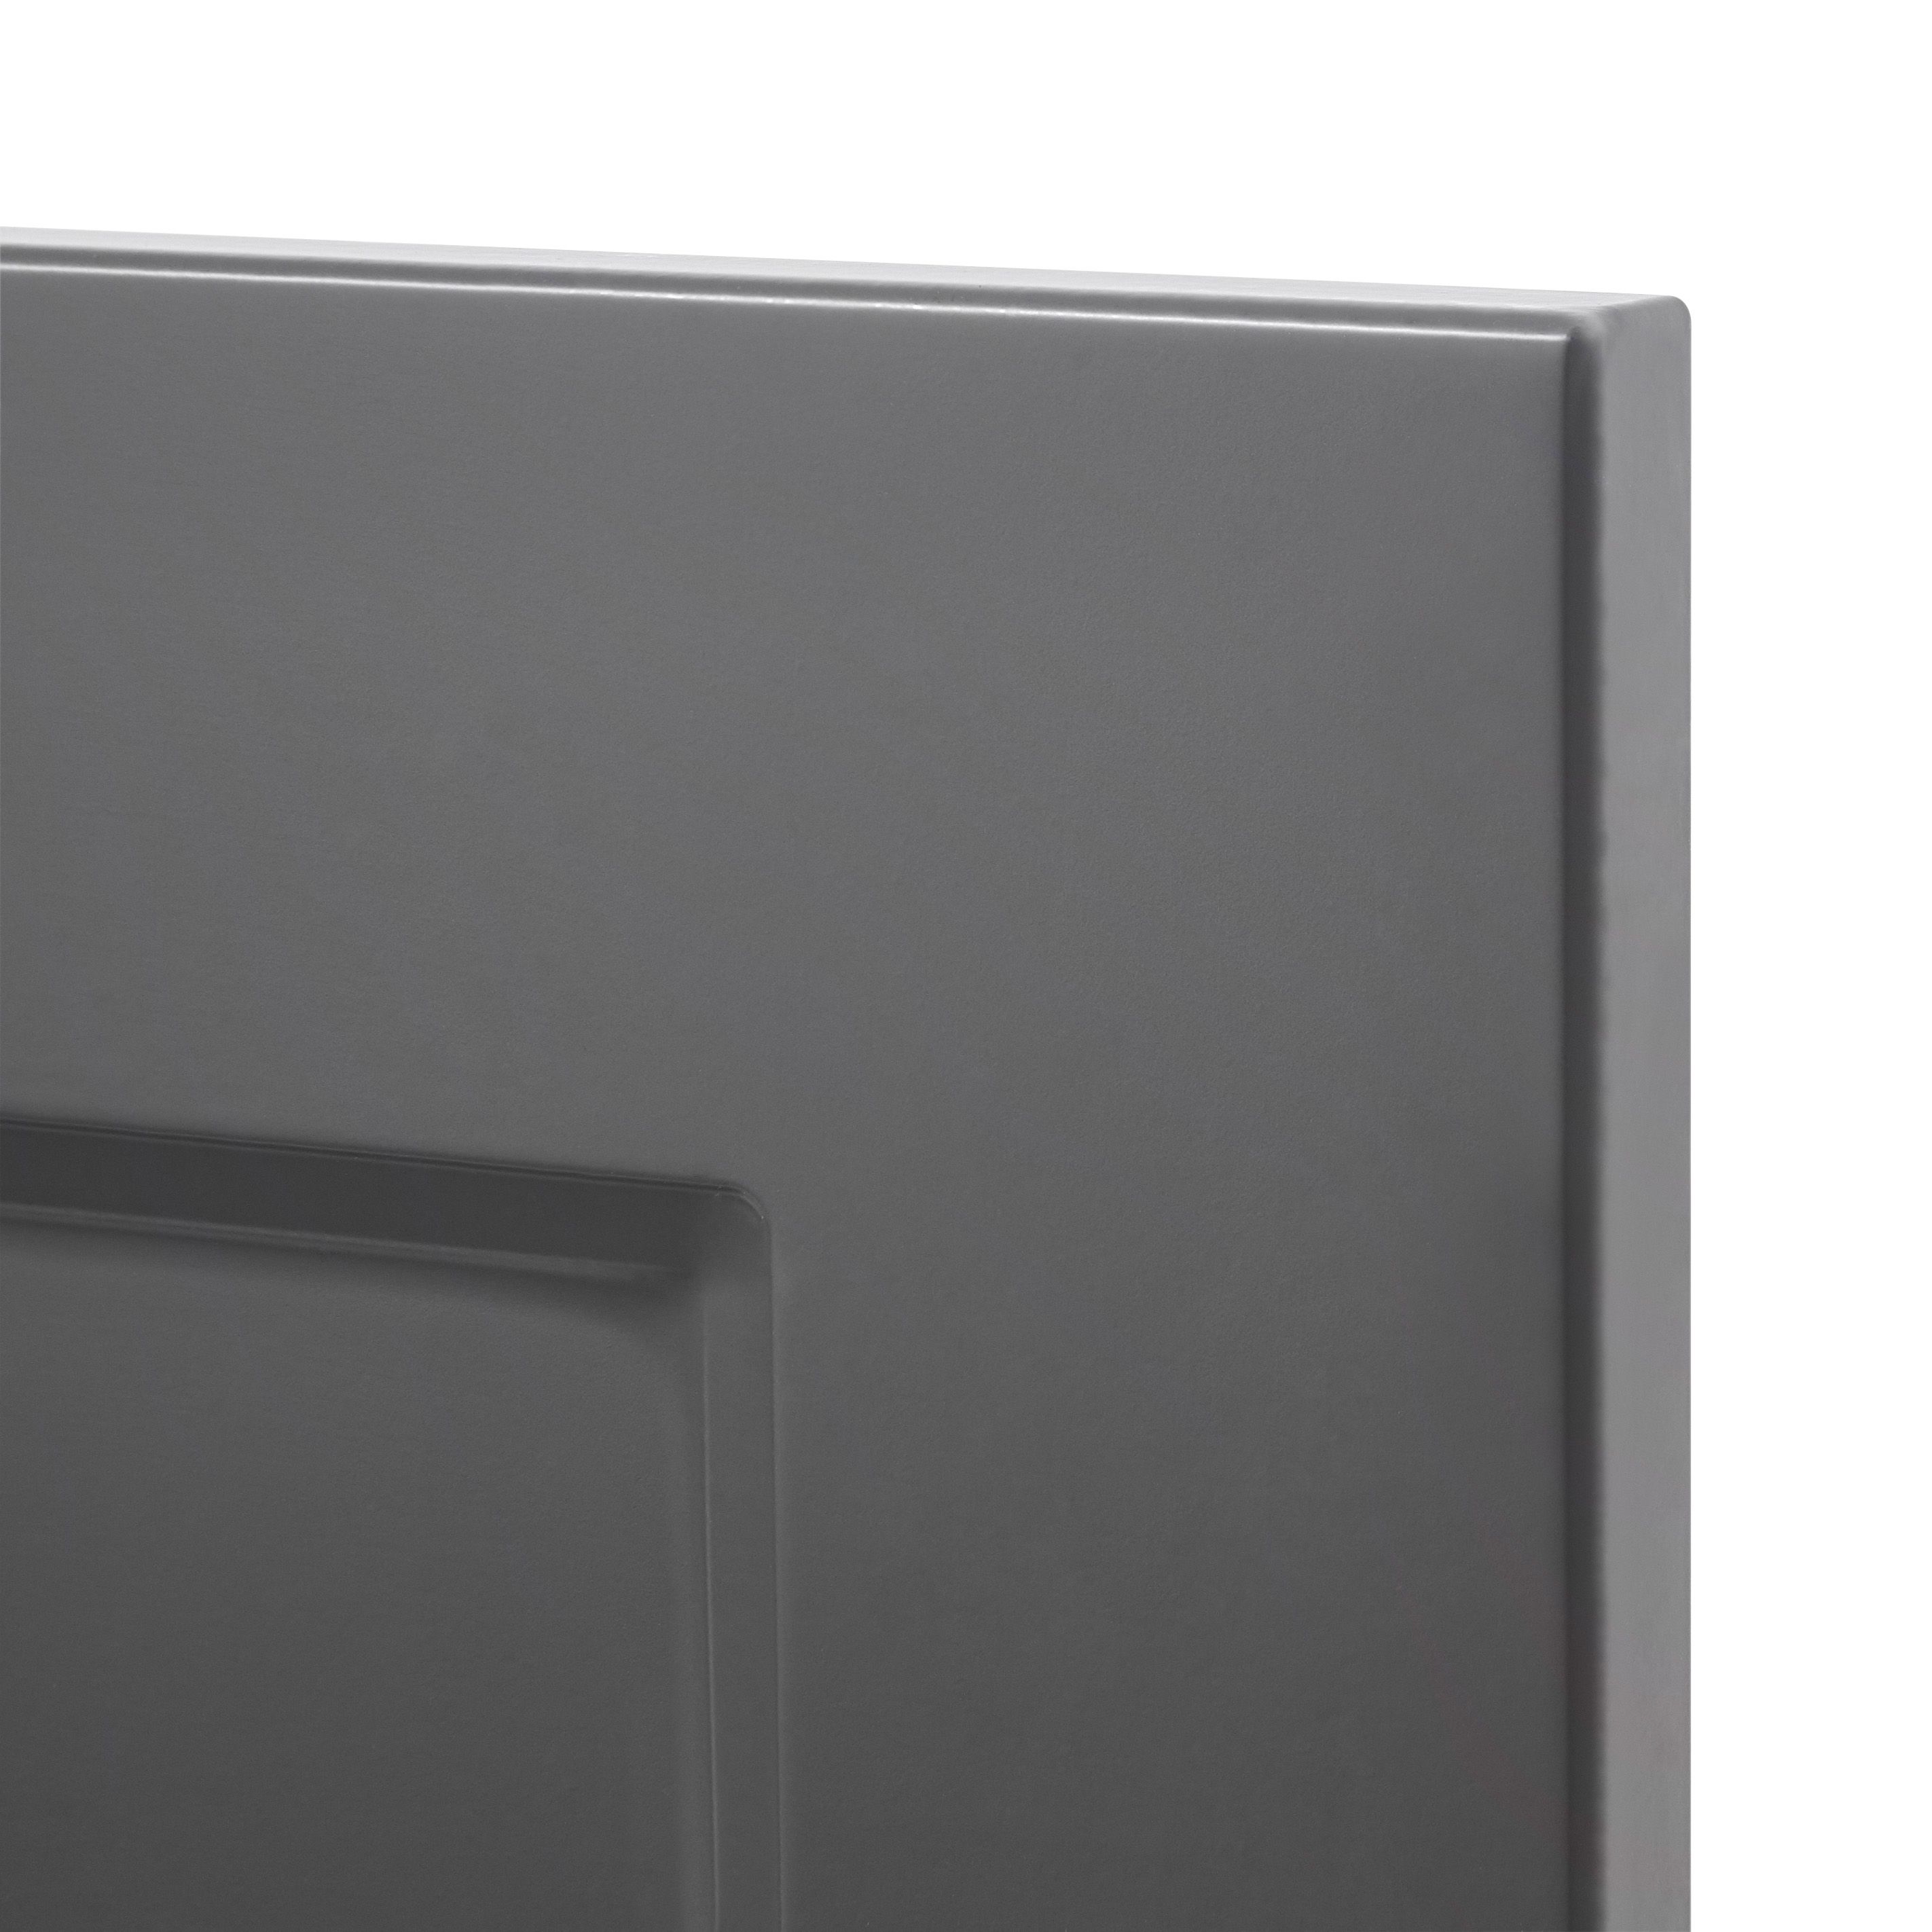 GoodHome Artemisia Matt graphite classic shaker Appliance Cabinet door (W)600mm (H)543mm (T)18mm